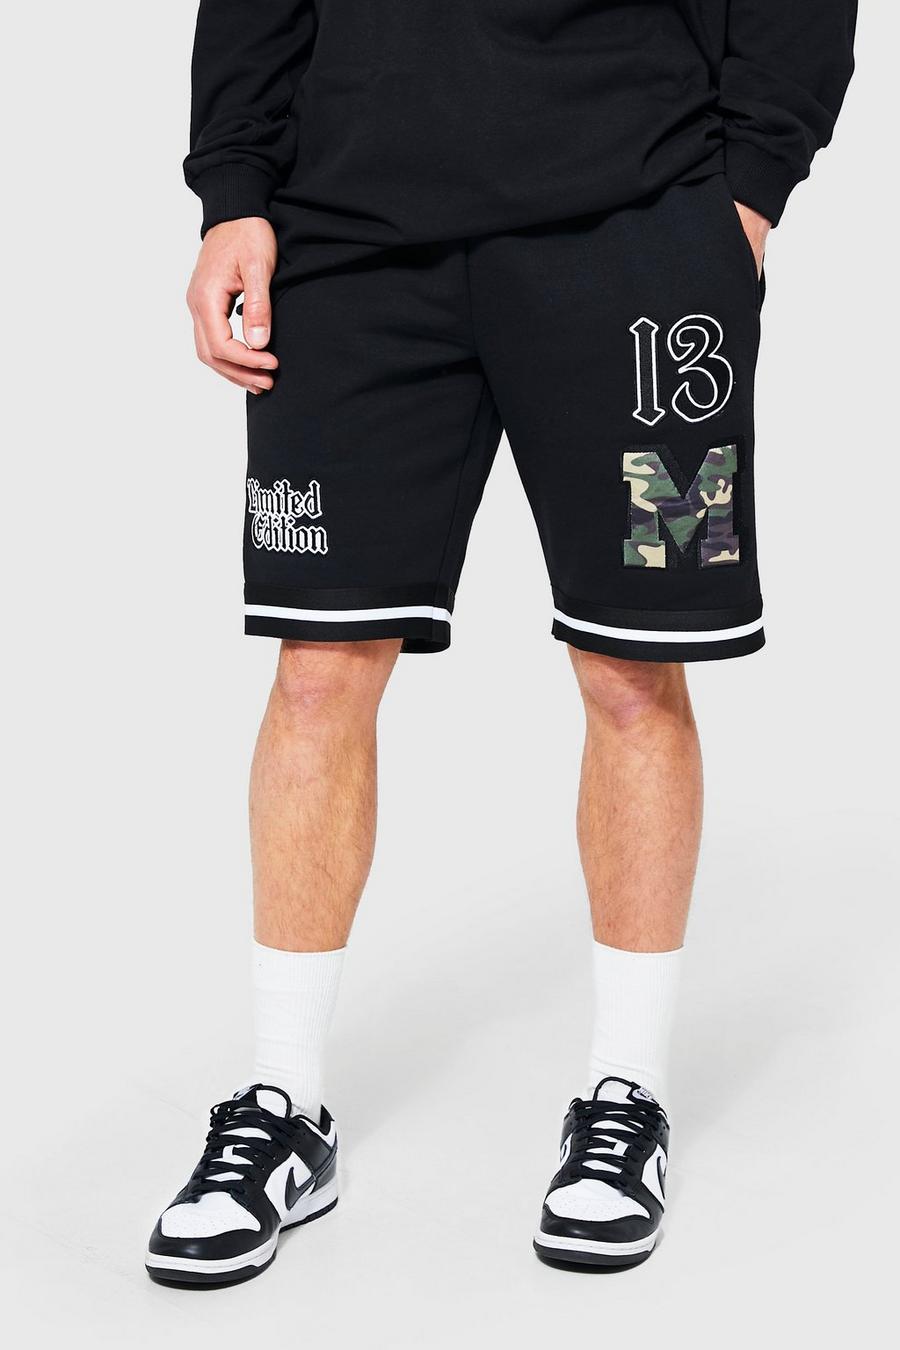 Pantalón corto Tall de tela jersey estilo baloncesto con aplique universitario, Black nero